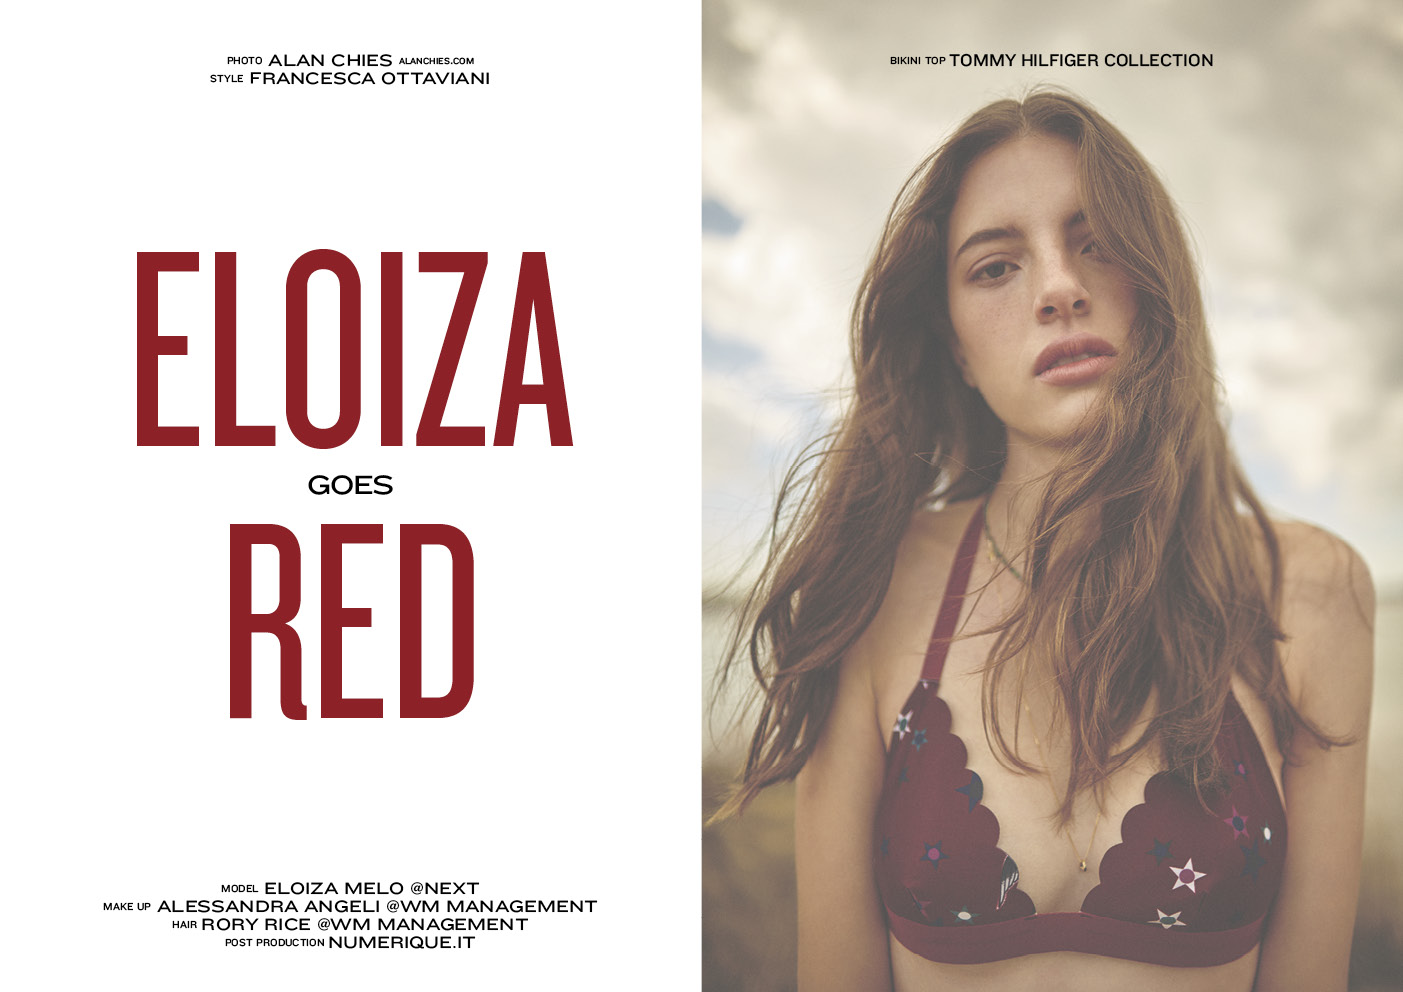 RedMilk June 2015 “Eloiza goes red” | Alan Chies | RedMilk | Francesca Ottaviani | Numerique Retouch Photo Retouching Studio